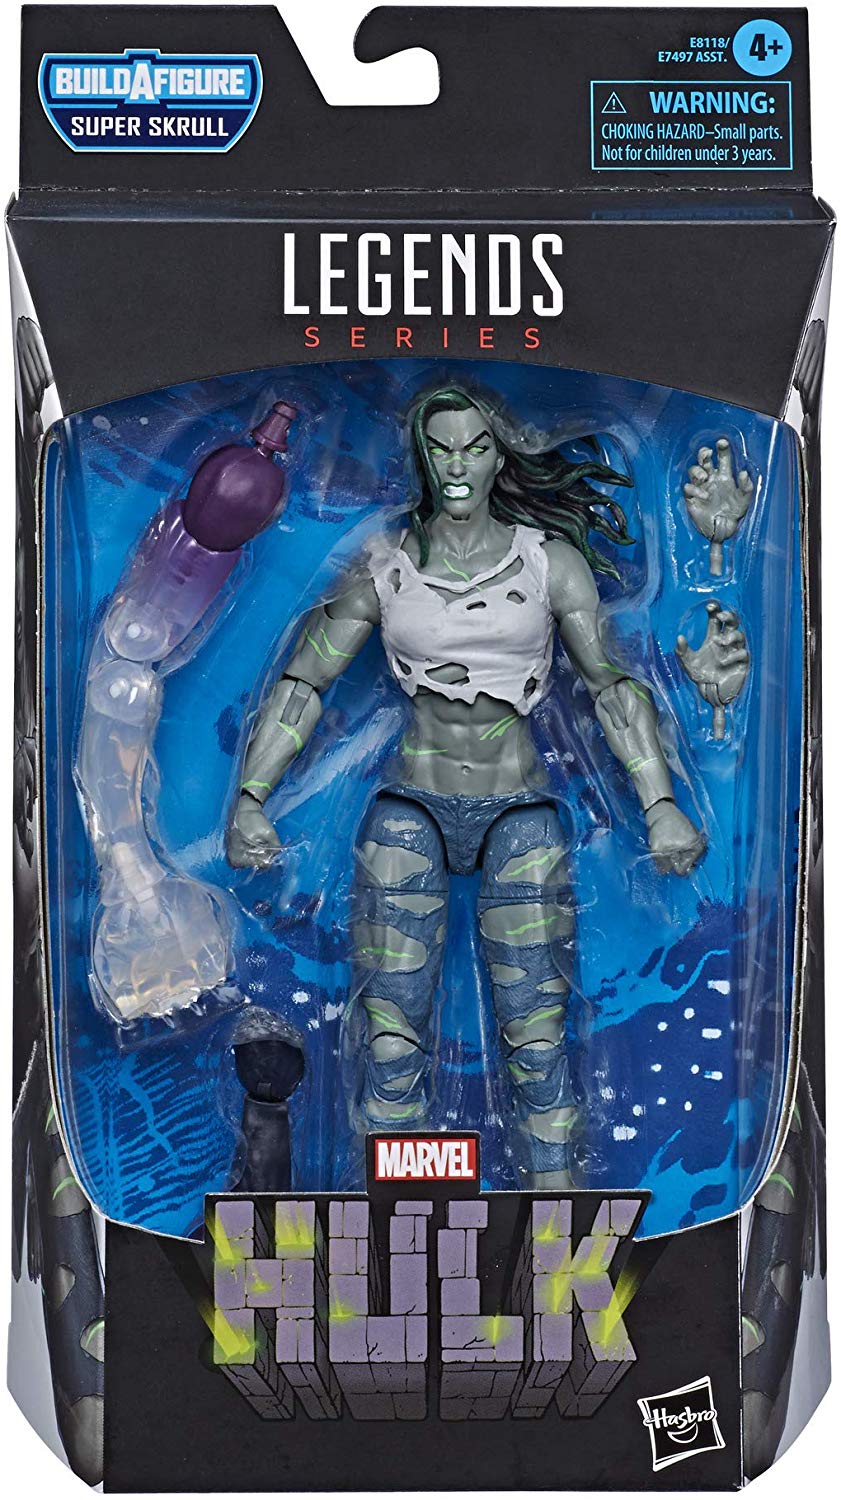 6 inch hulk action figure